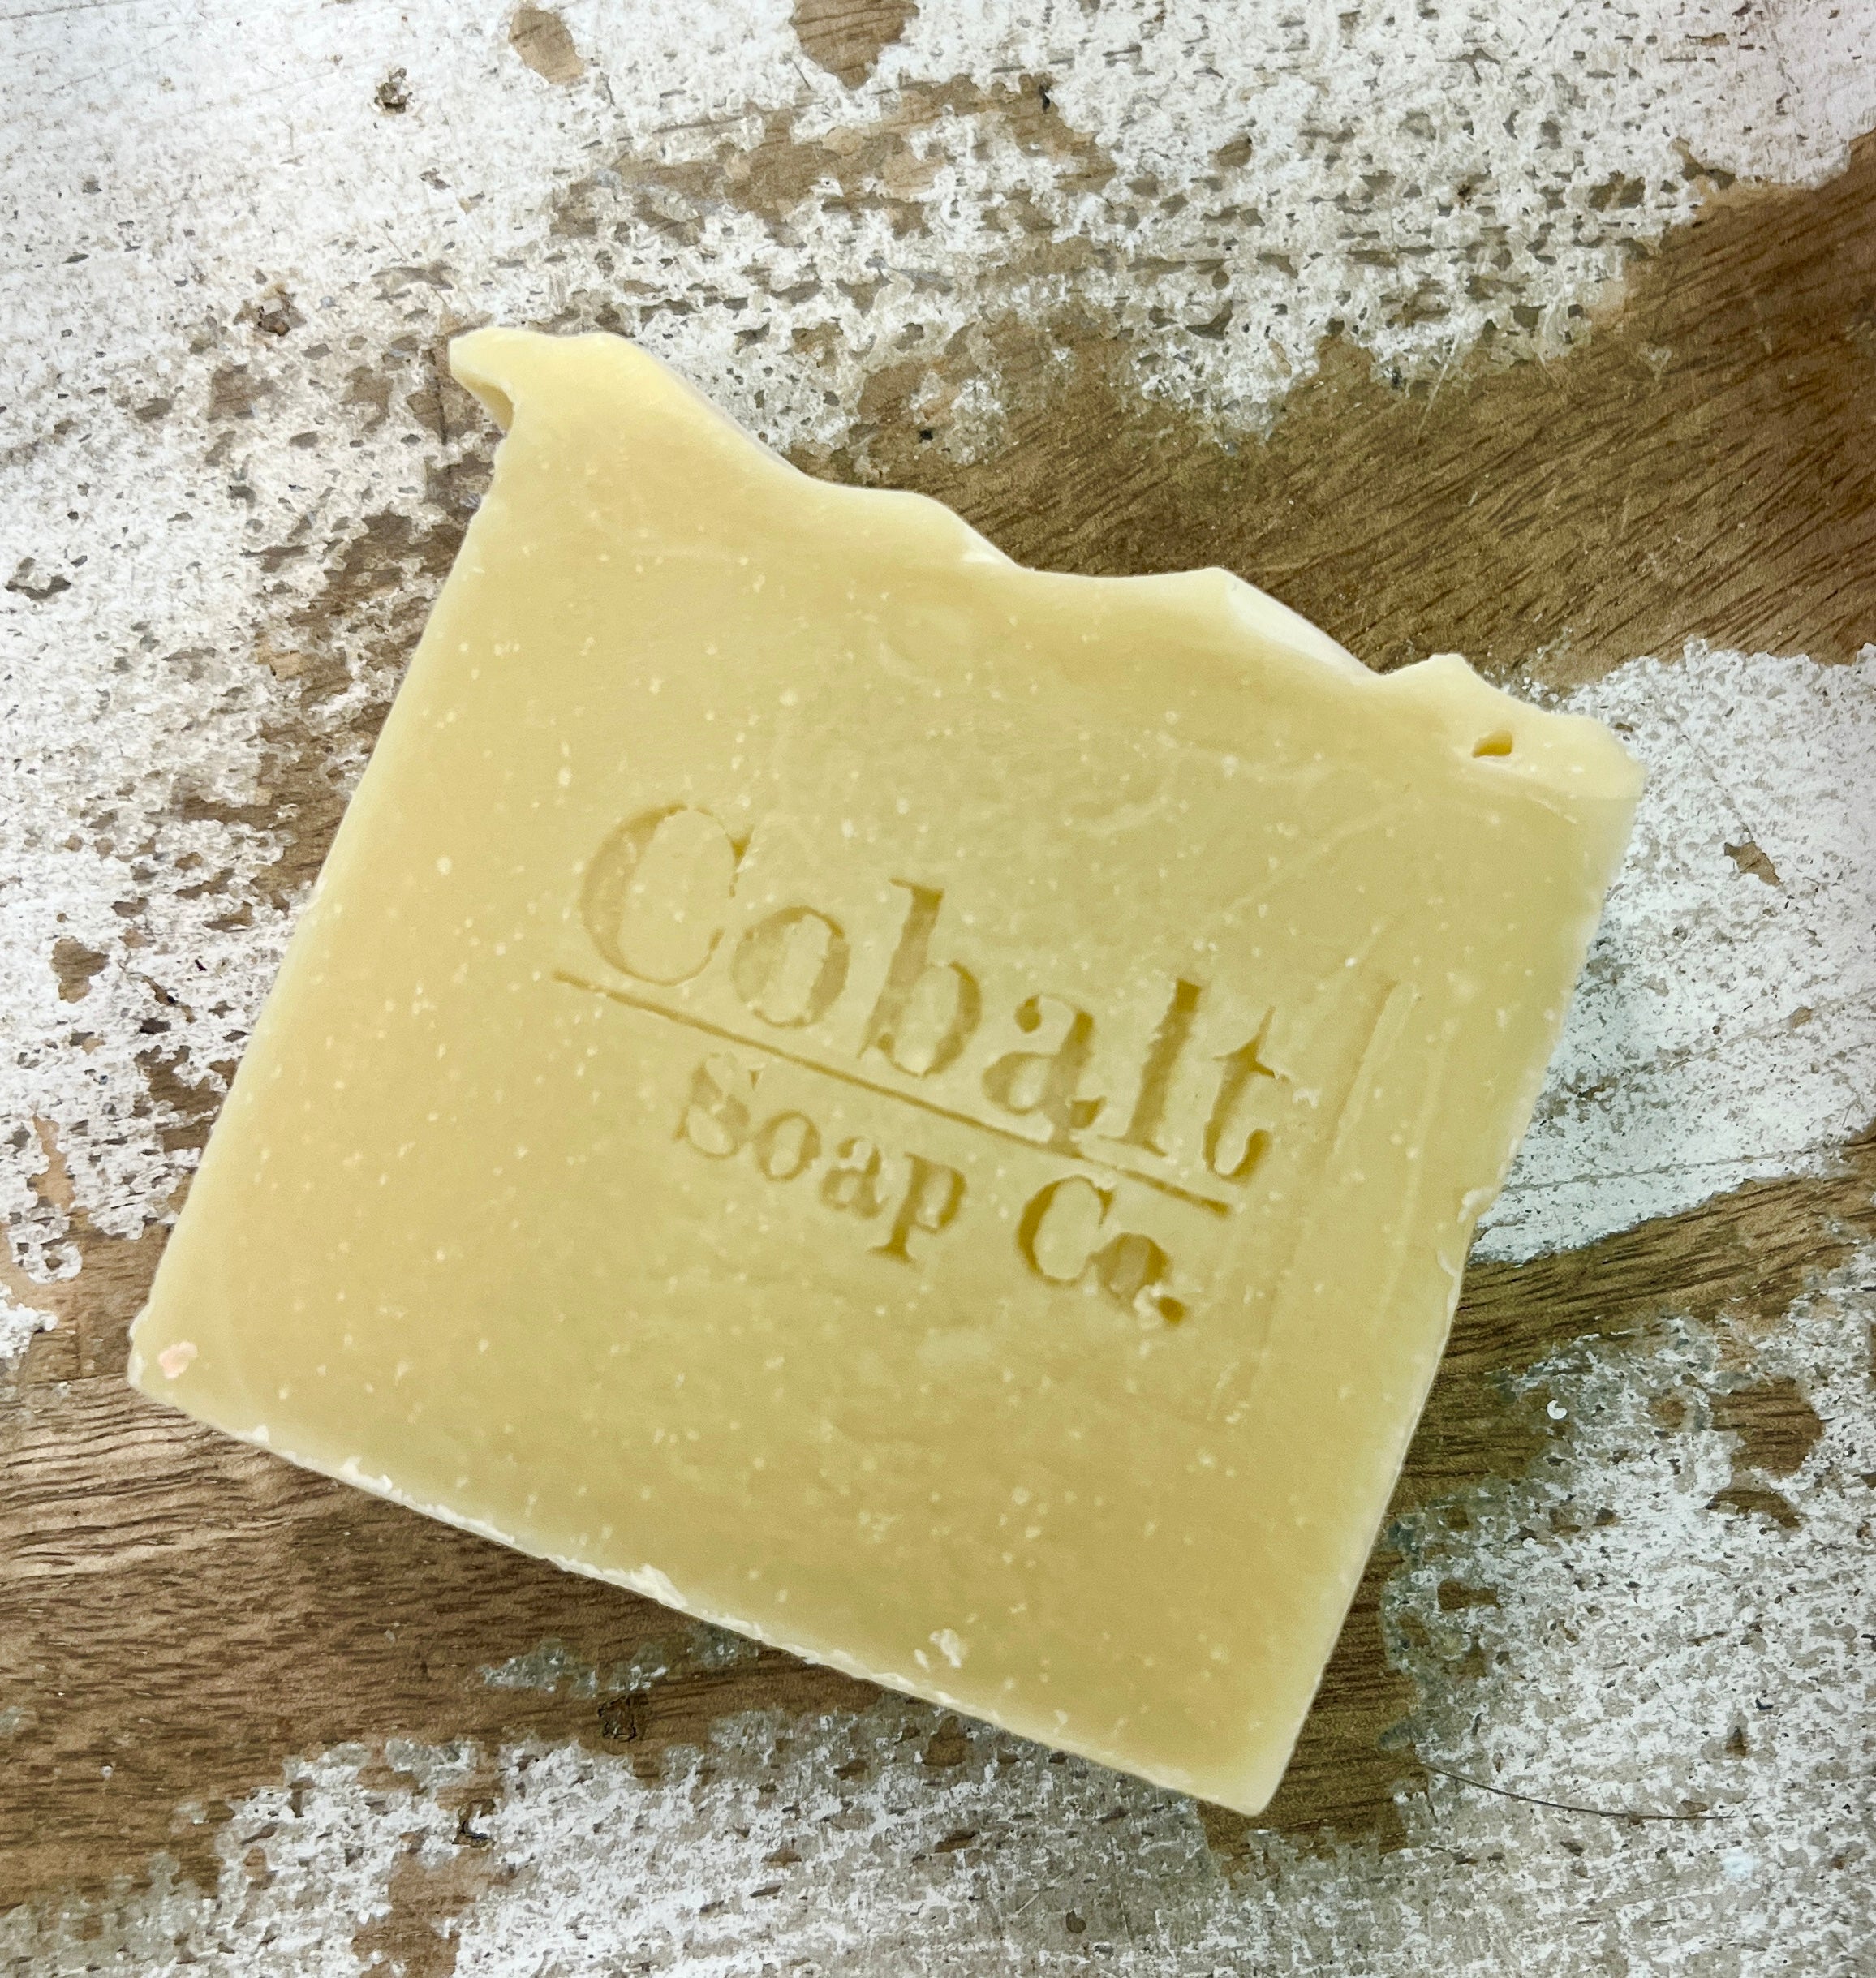 Cobalt Soap Co. - Bay Rum